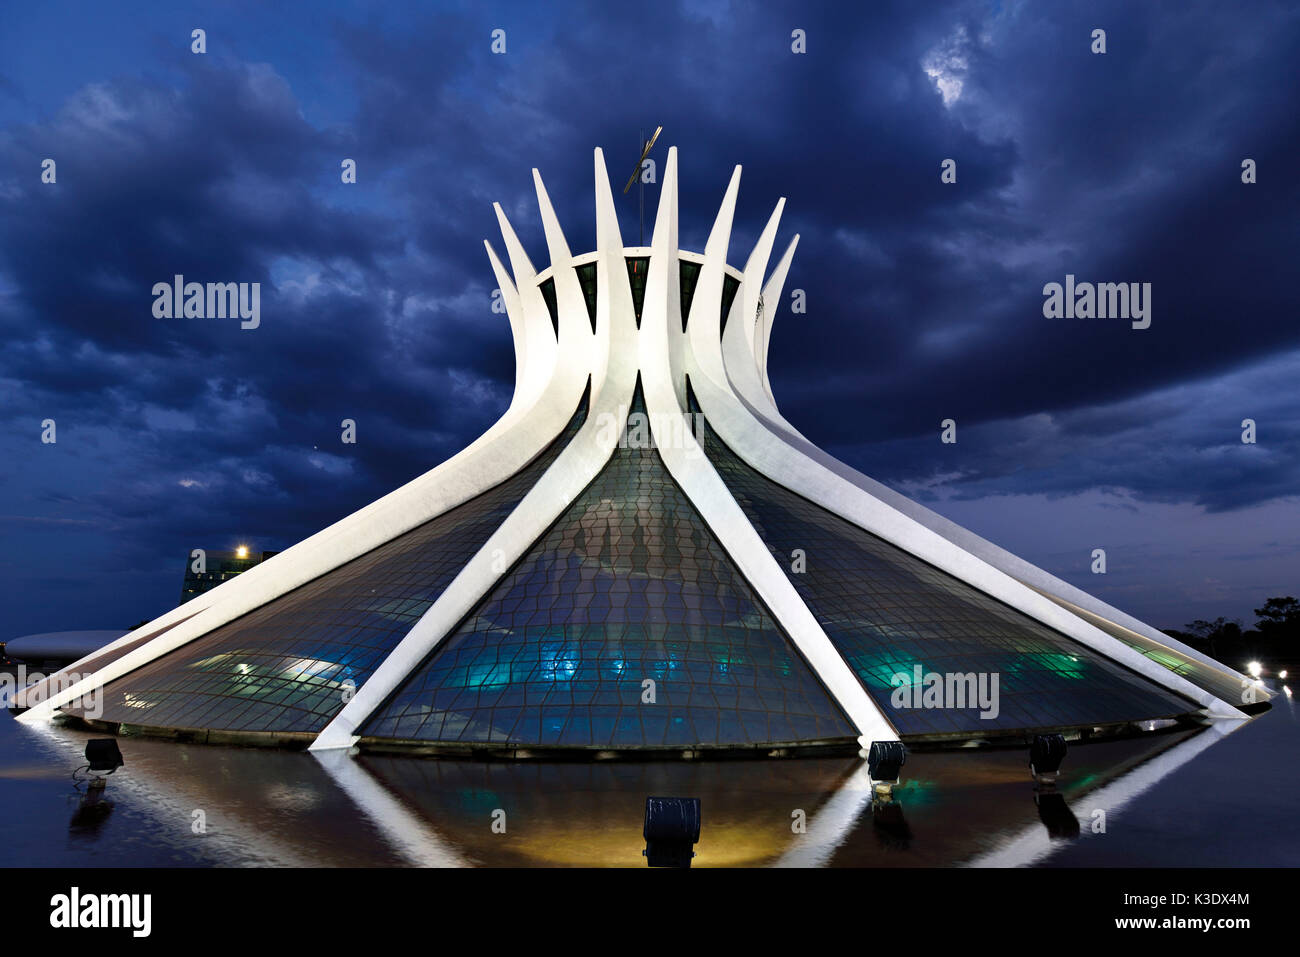 Brazil, Brazil, At night illuminated cathedral Metropolitana Nossa Senhora Aparecida of Oscar Niemeyer, Stock Photo